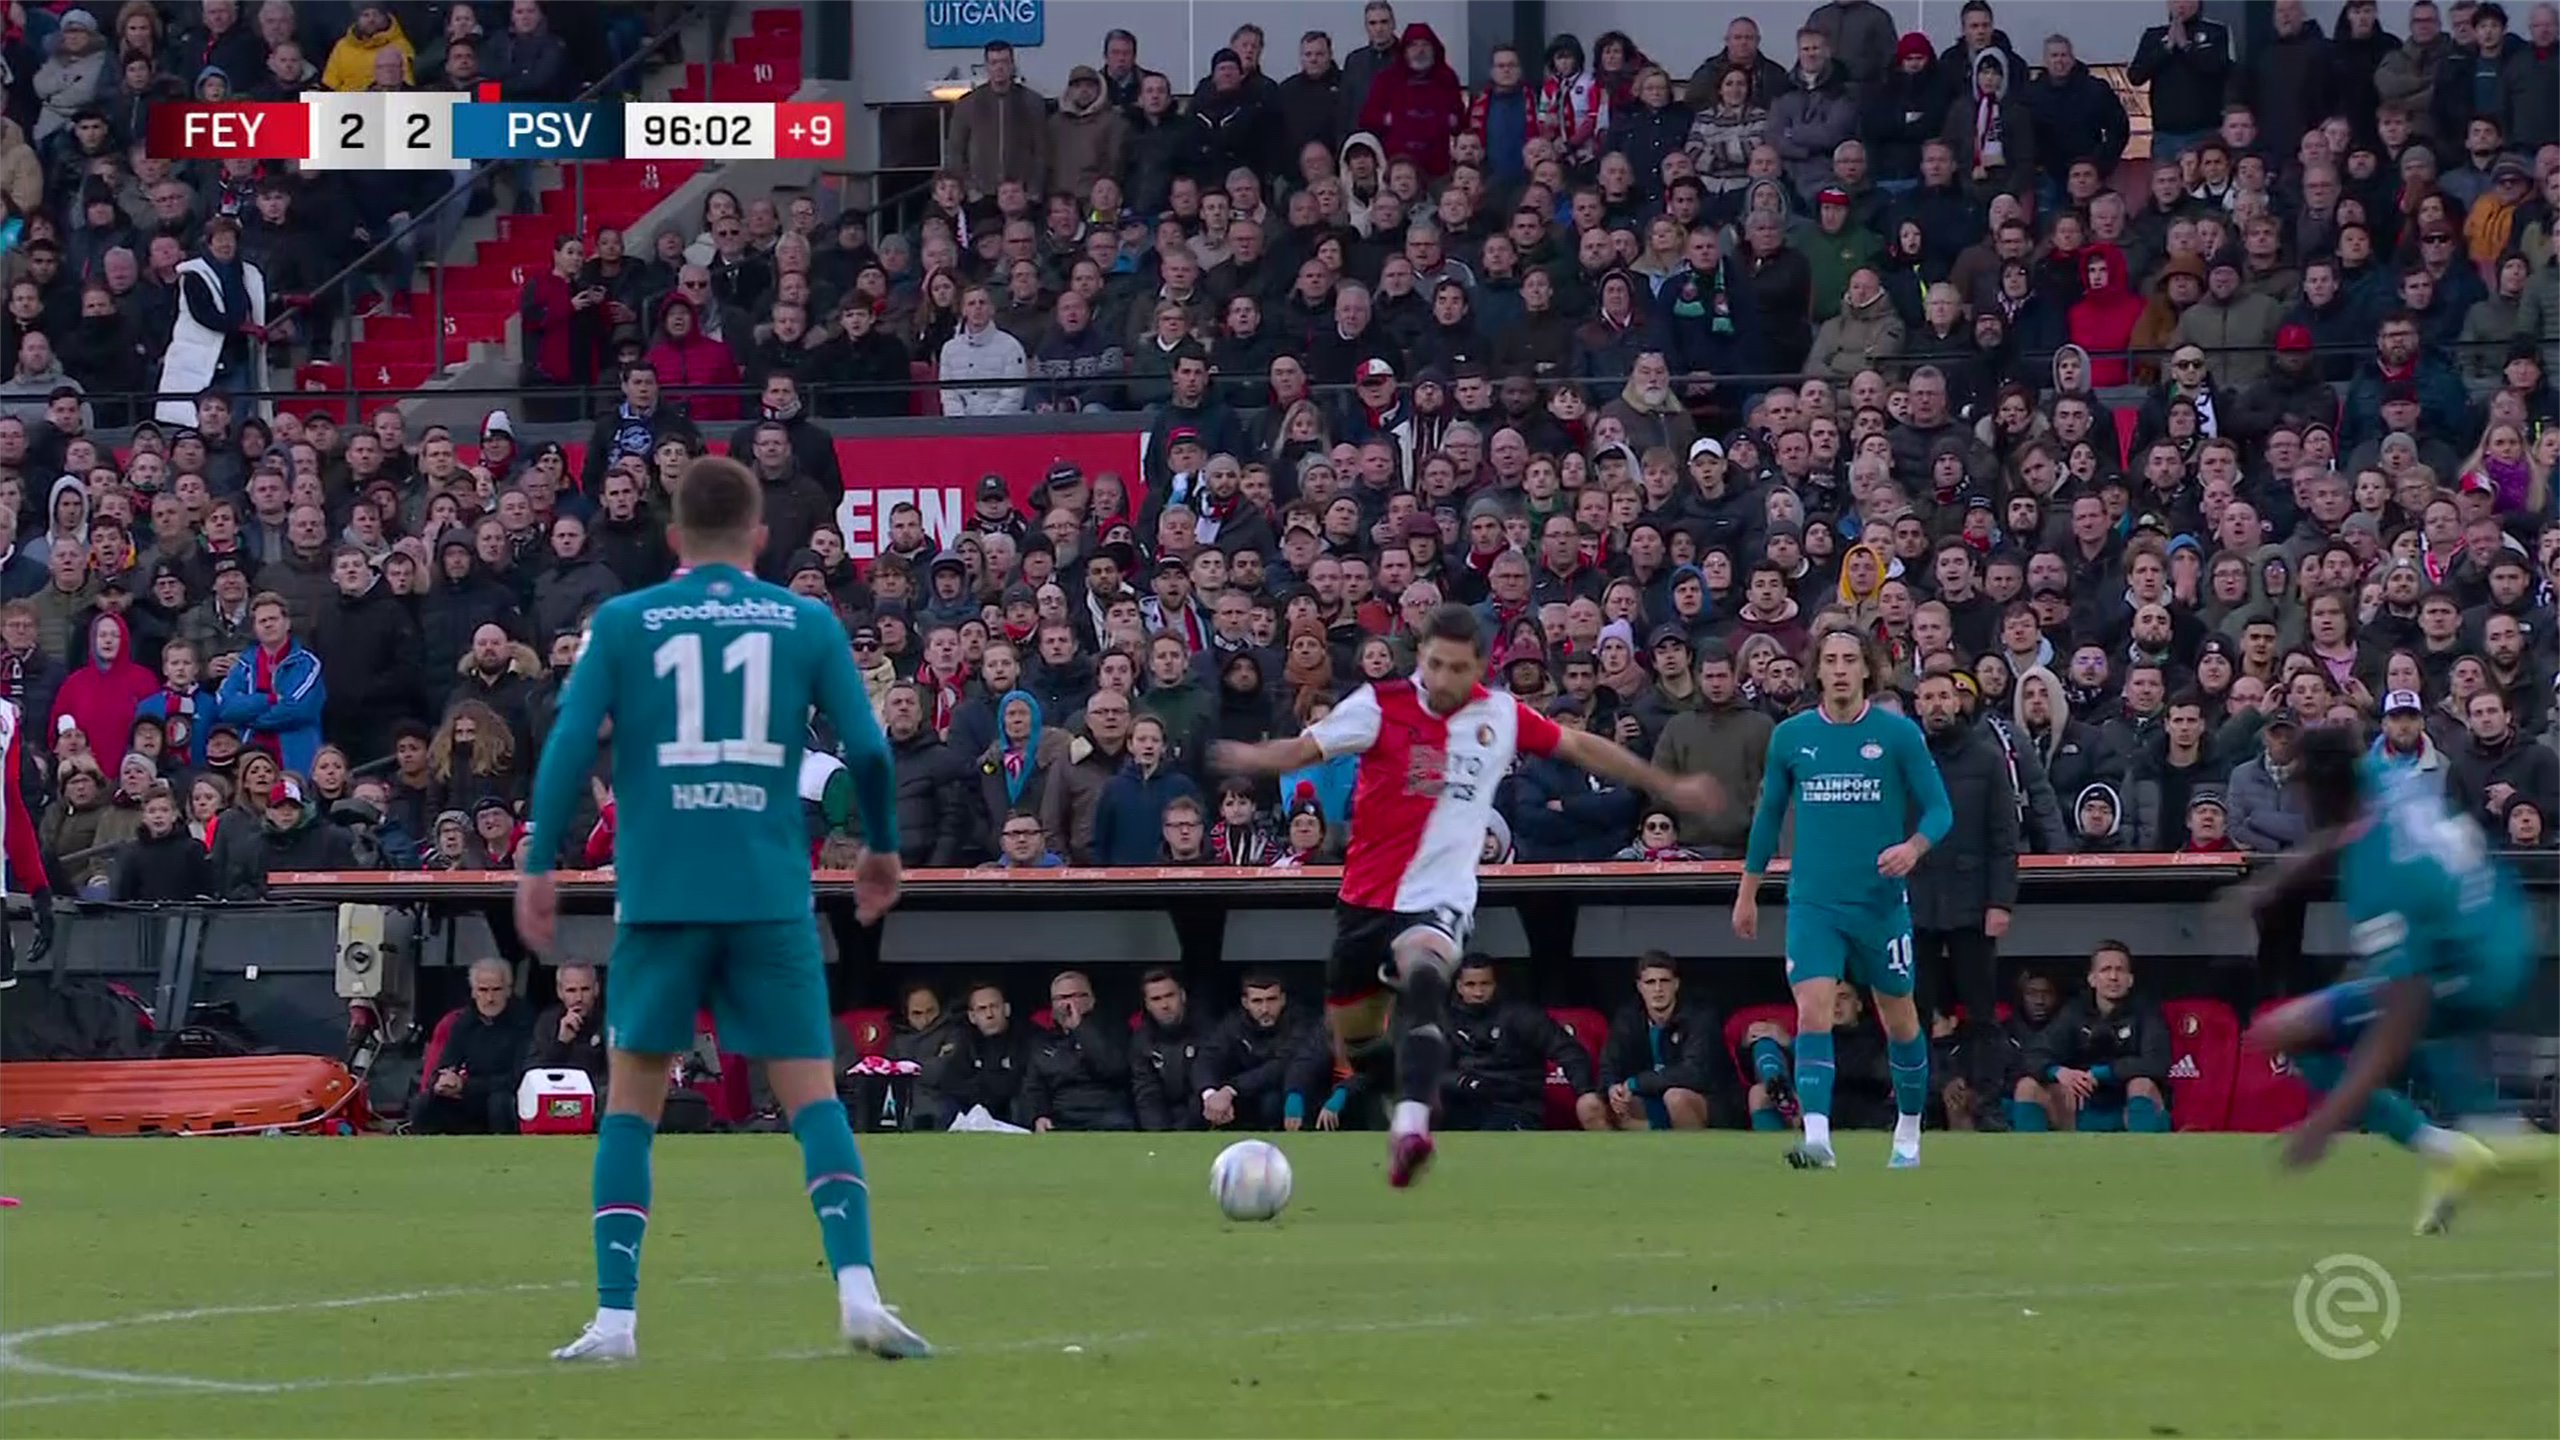 Finale infuocato tra Feyenoord e PSV: Jahanbakhsh fissa il 2-2, gli highlights